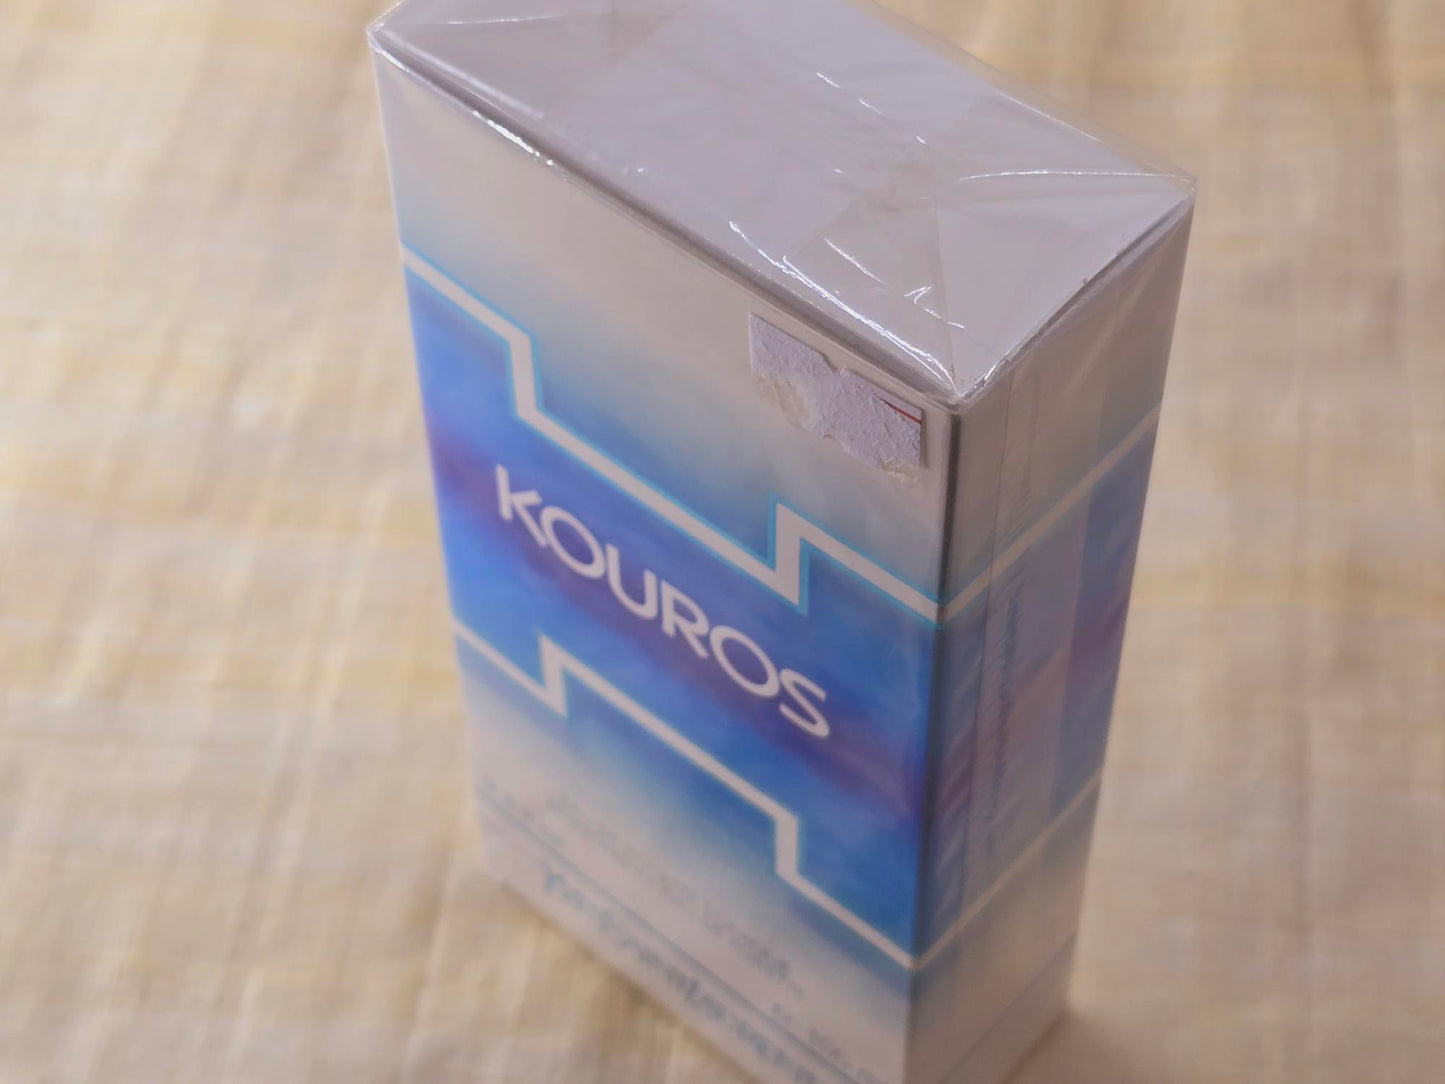 Kouros Tonique Energizing EDT 2008 Yves Saint Laurent for men Spray 100 ml 3.4 oz, Rare, Vintage, Sealed